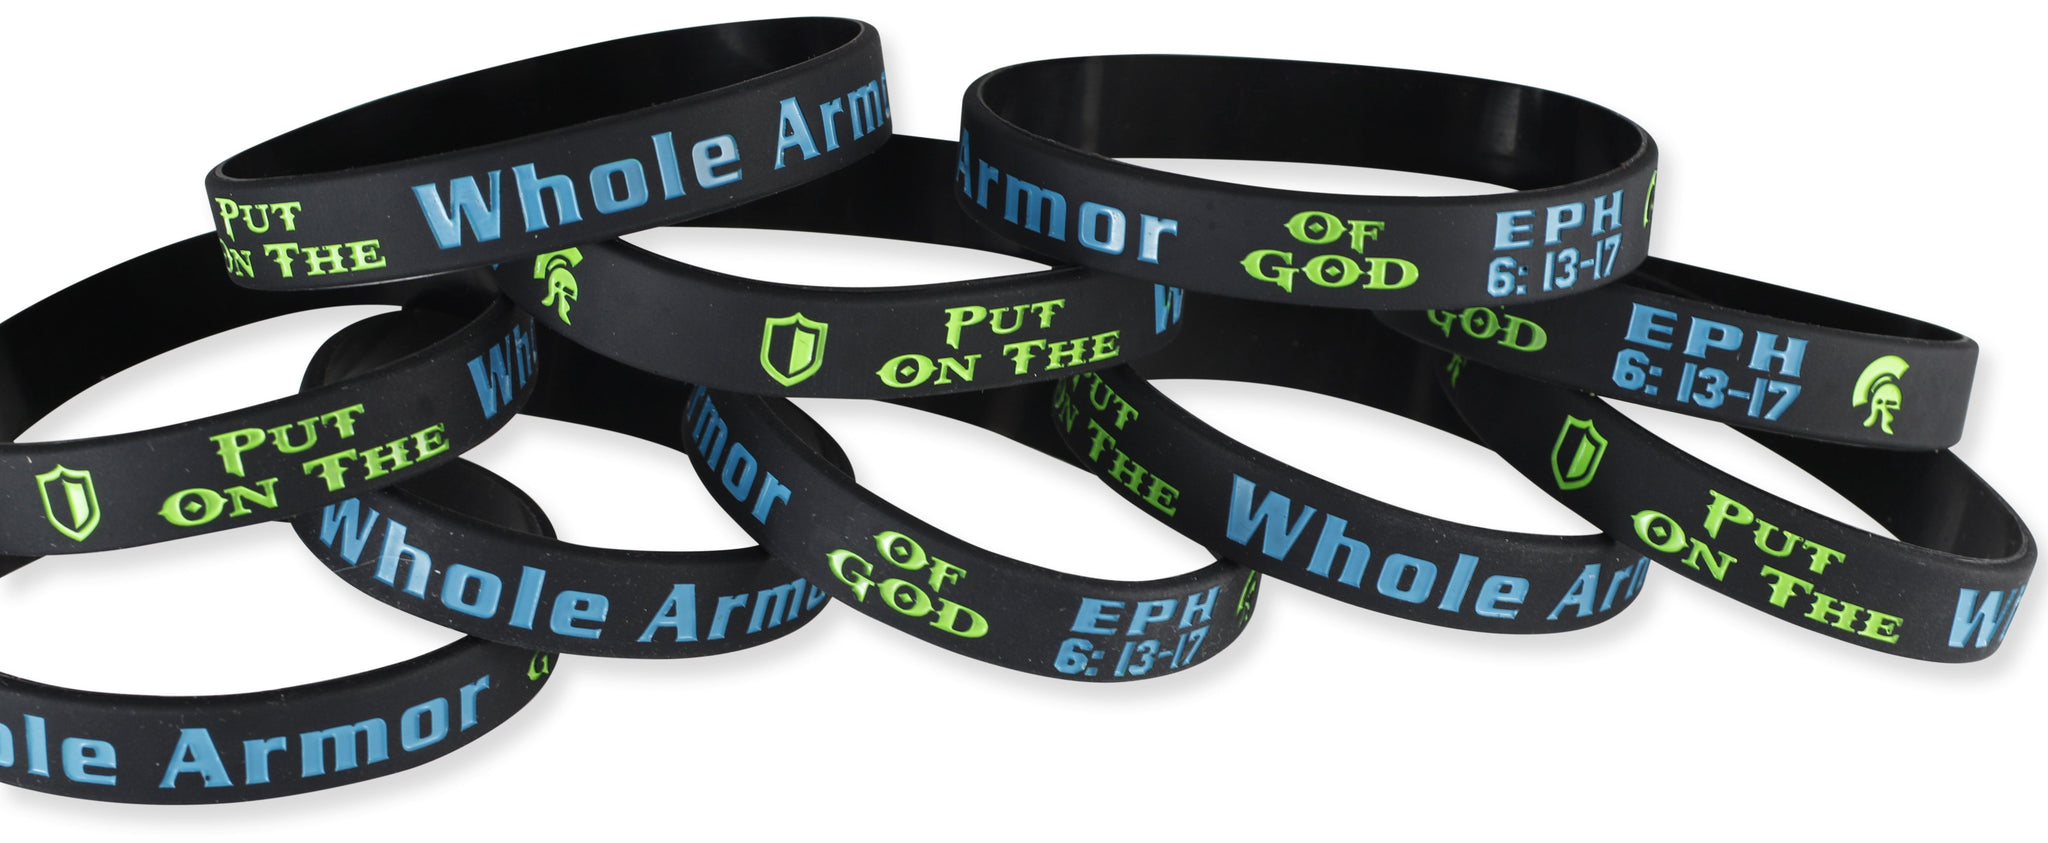 Put on The Whole Armor of God Ephesians 6:13-17 Silicone Bracelet Wristbands Wristband WizardPins 100 Wristbands 